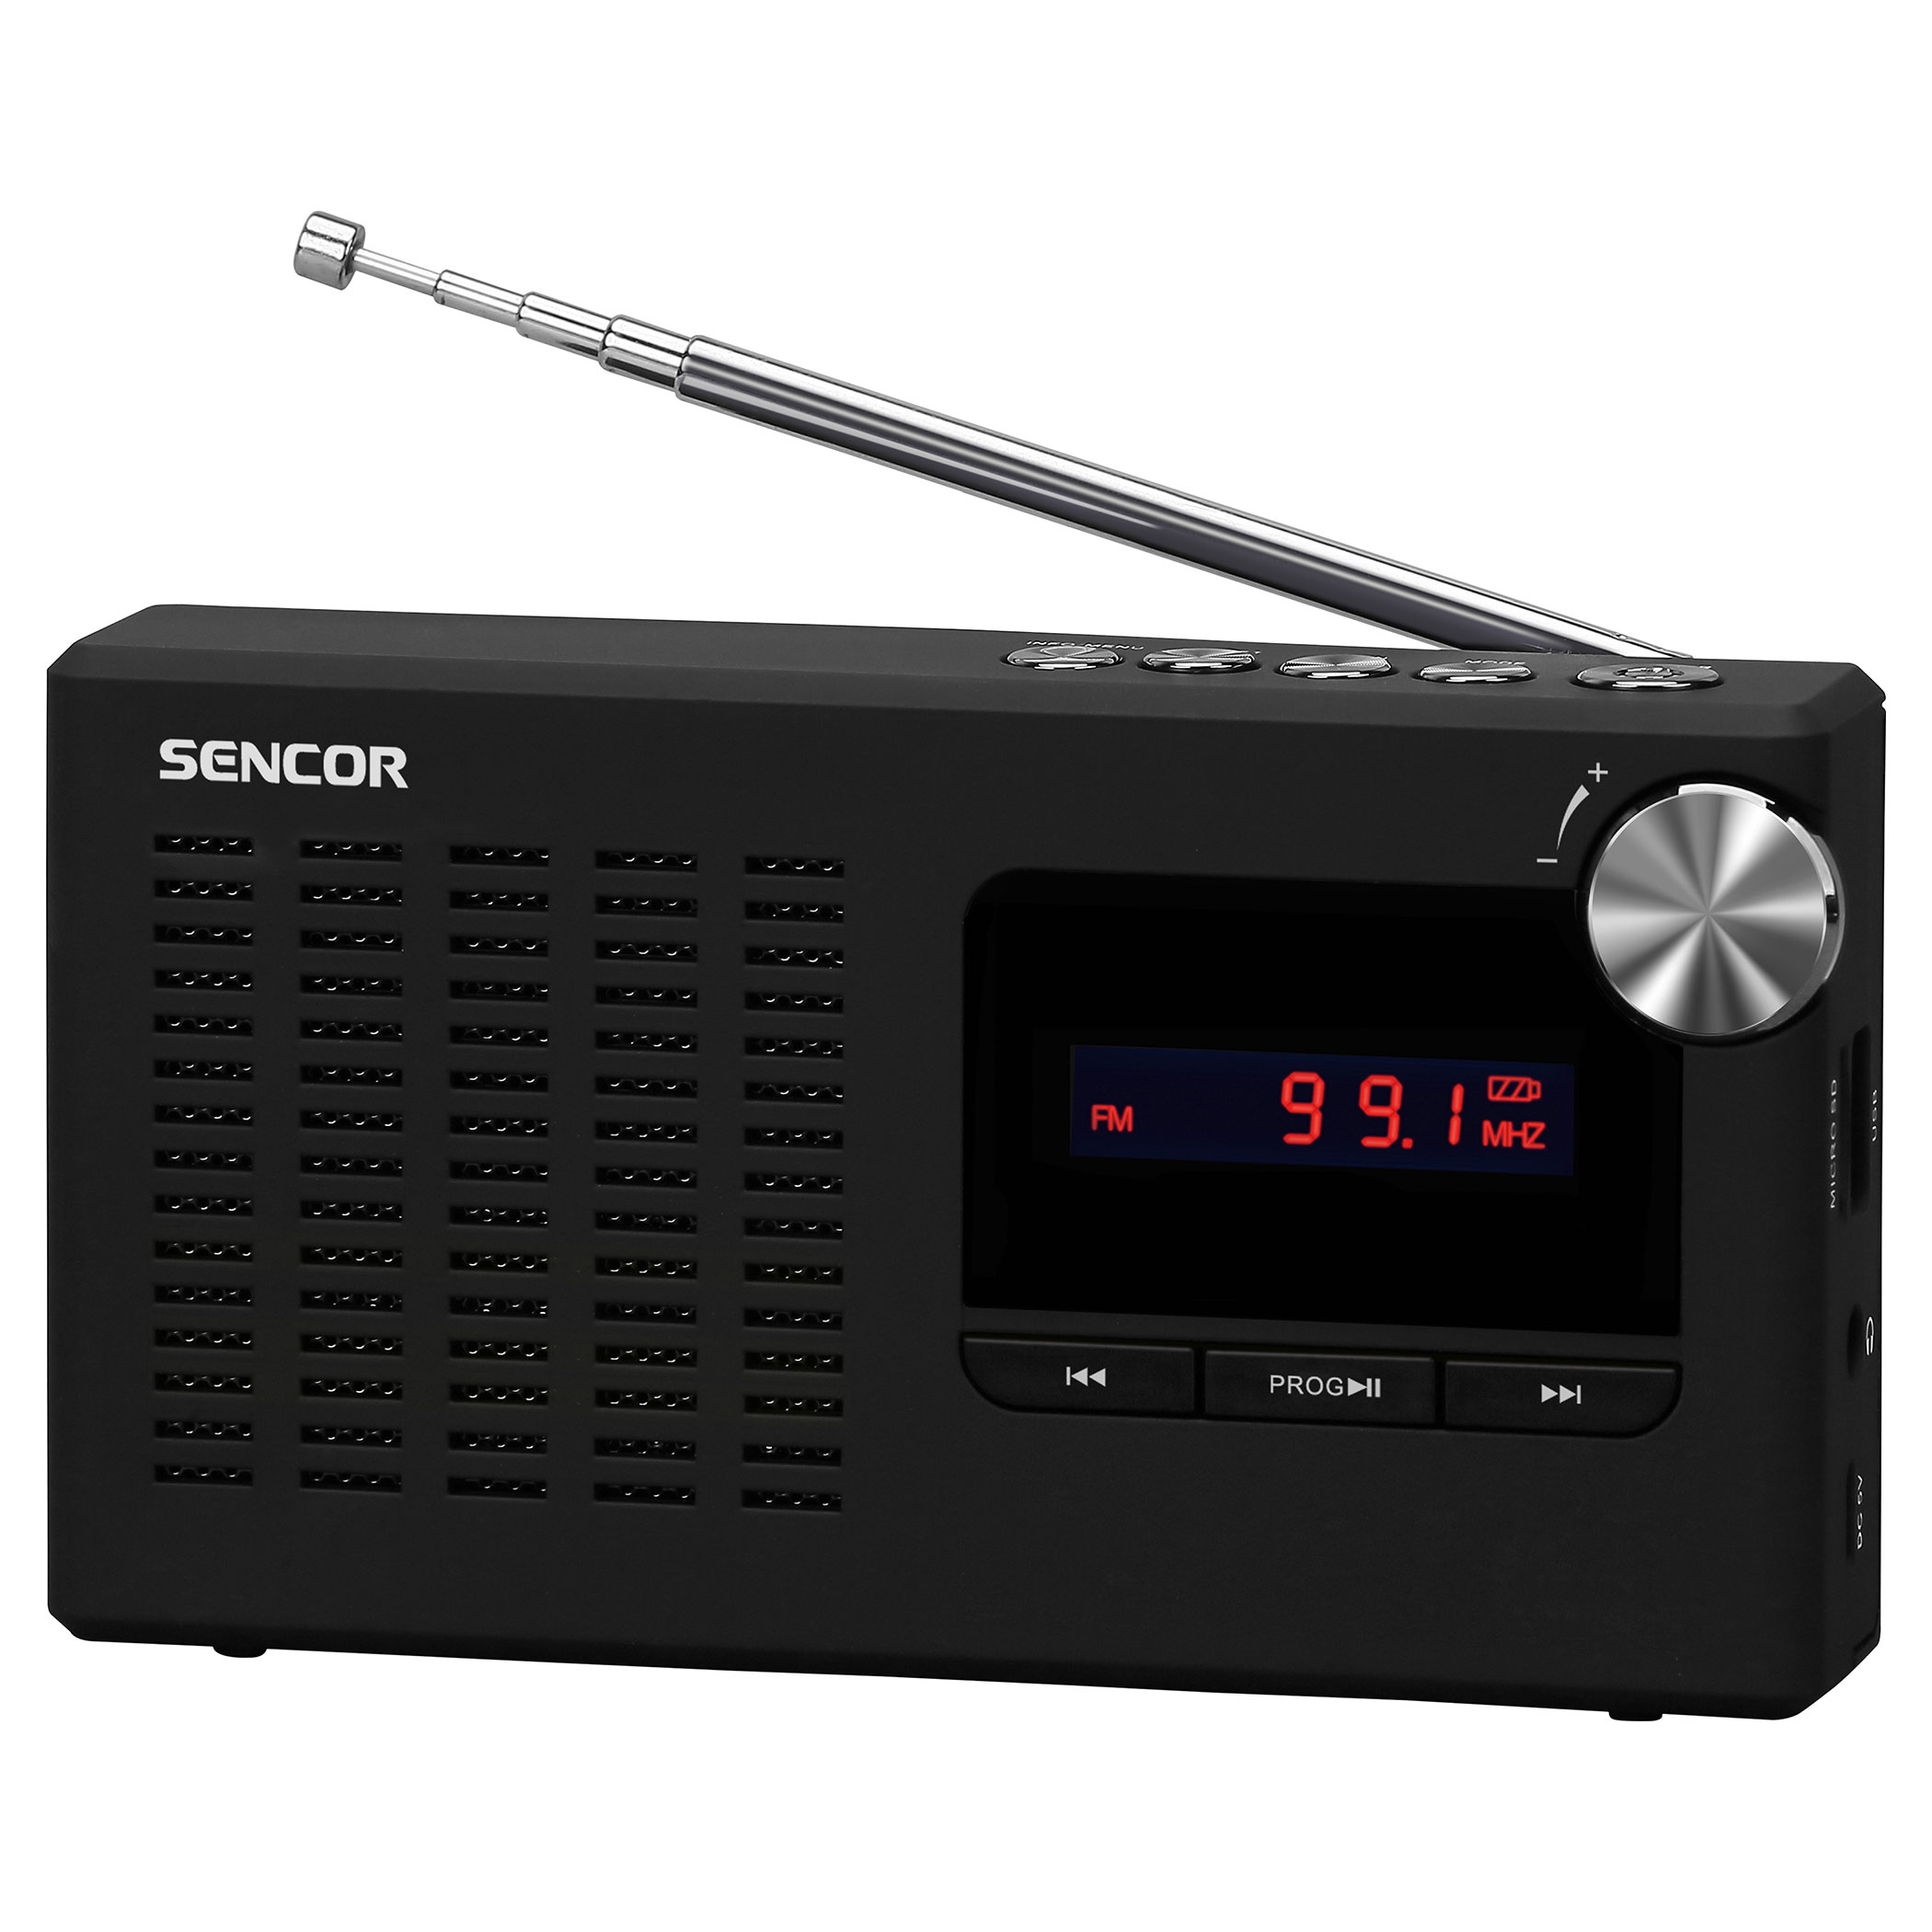 Ricevitore radio FM PLL portatile, SRD 2215